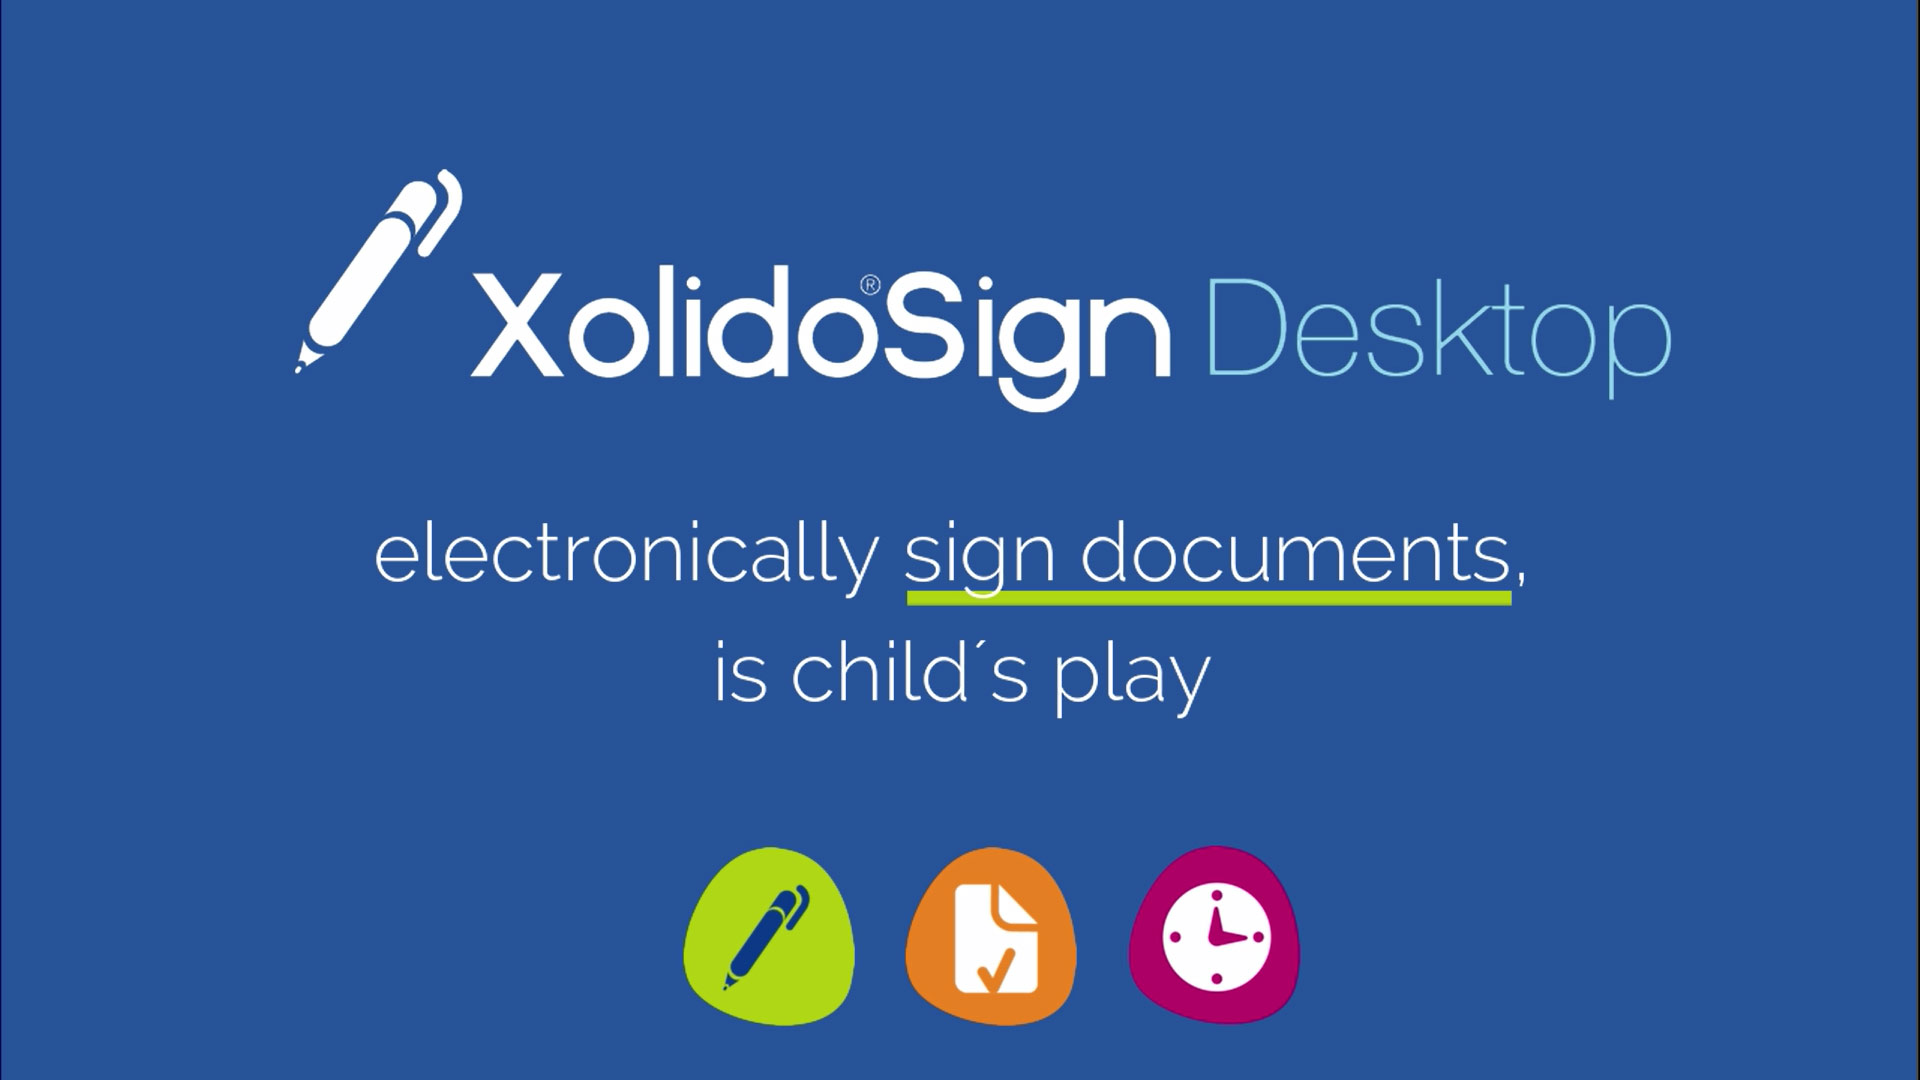 Signing electronic documents XolidoSign Desktop